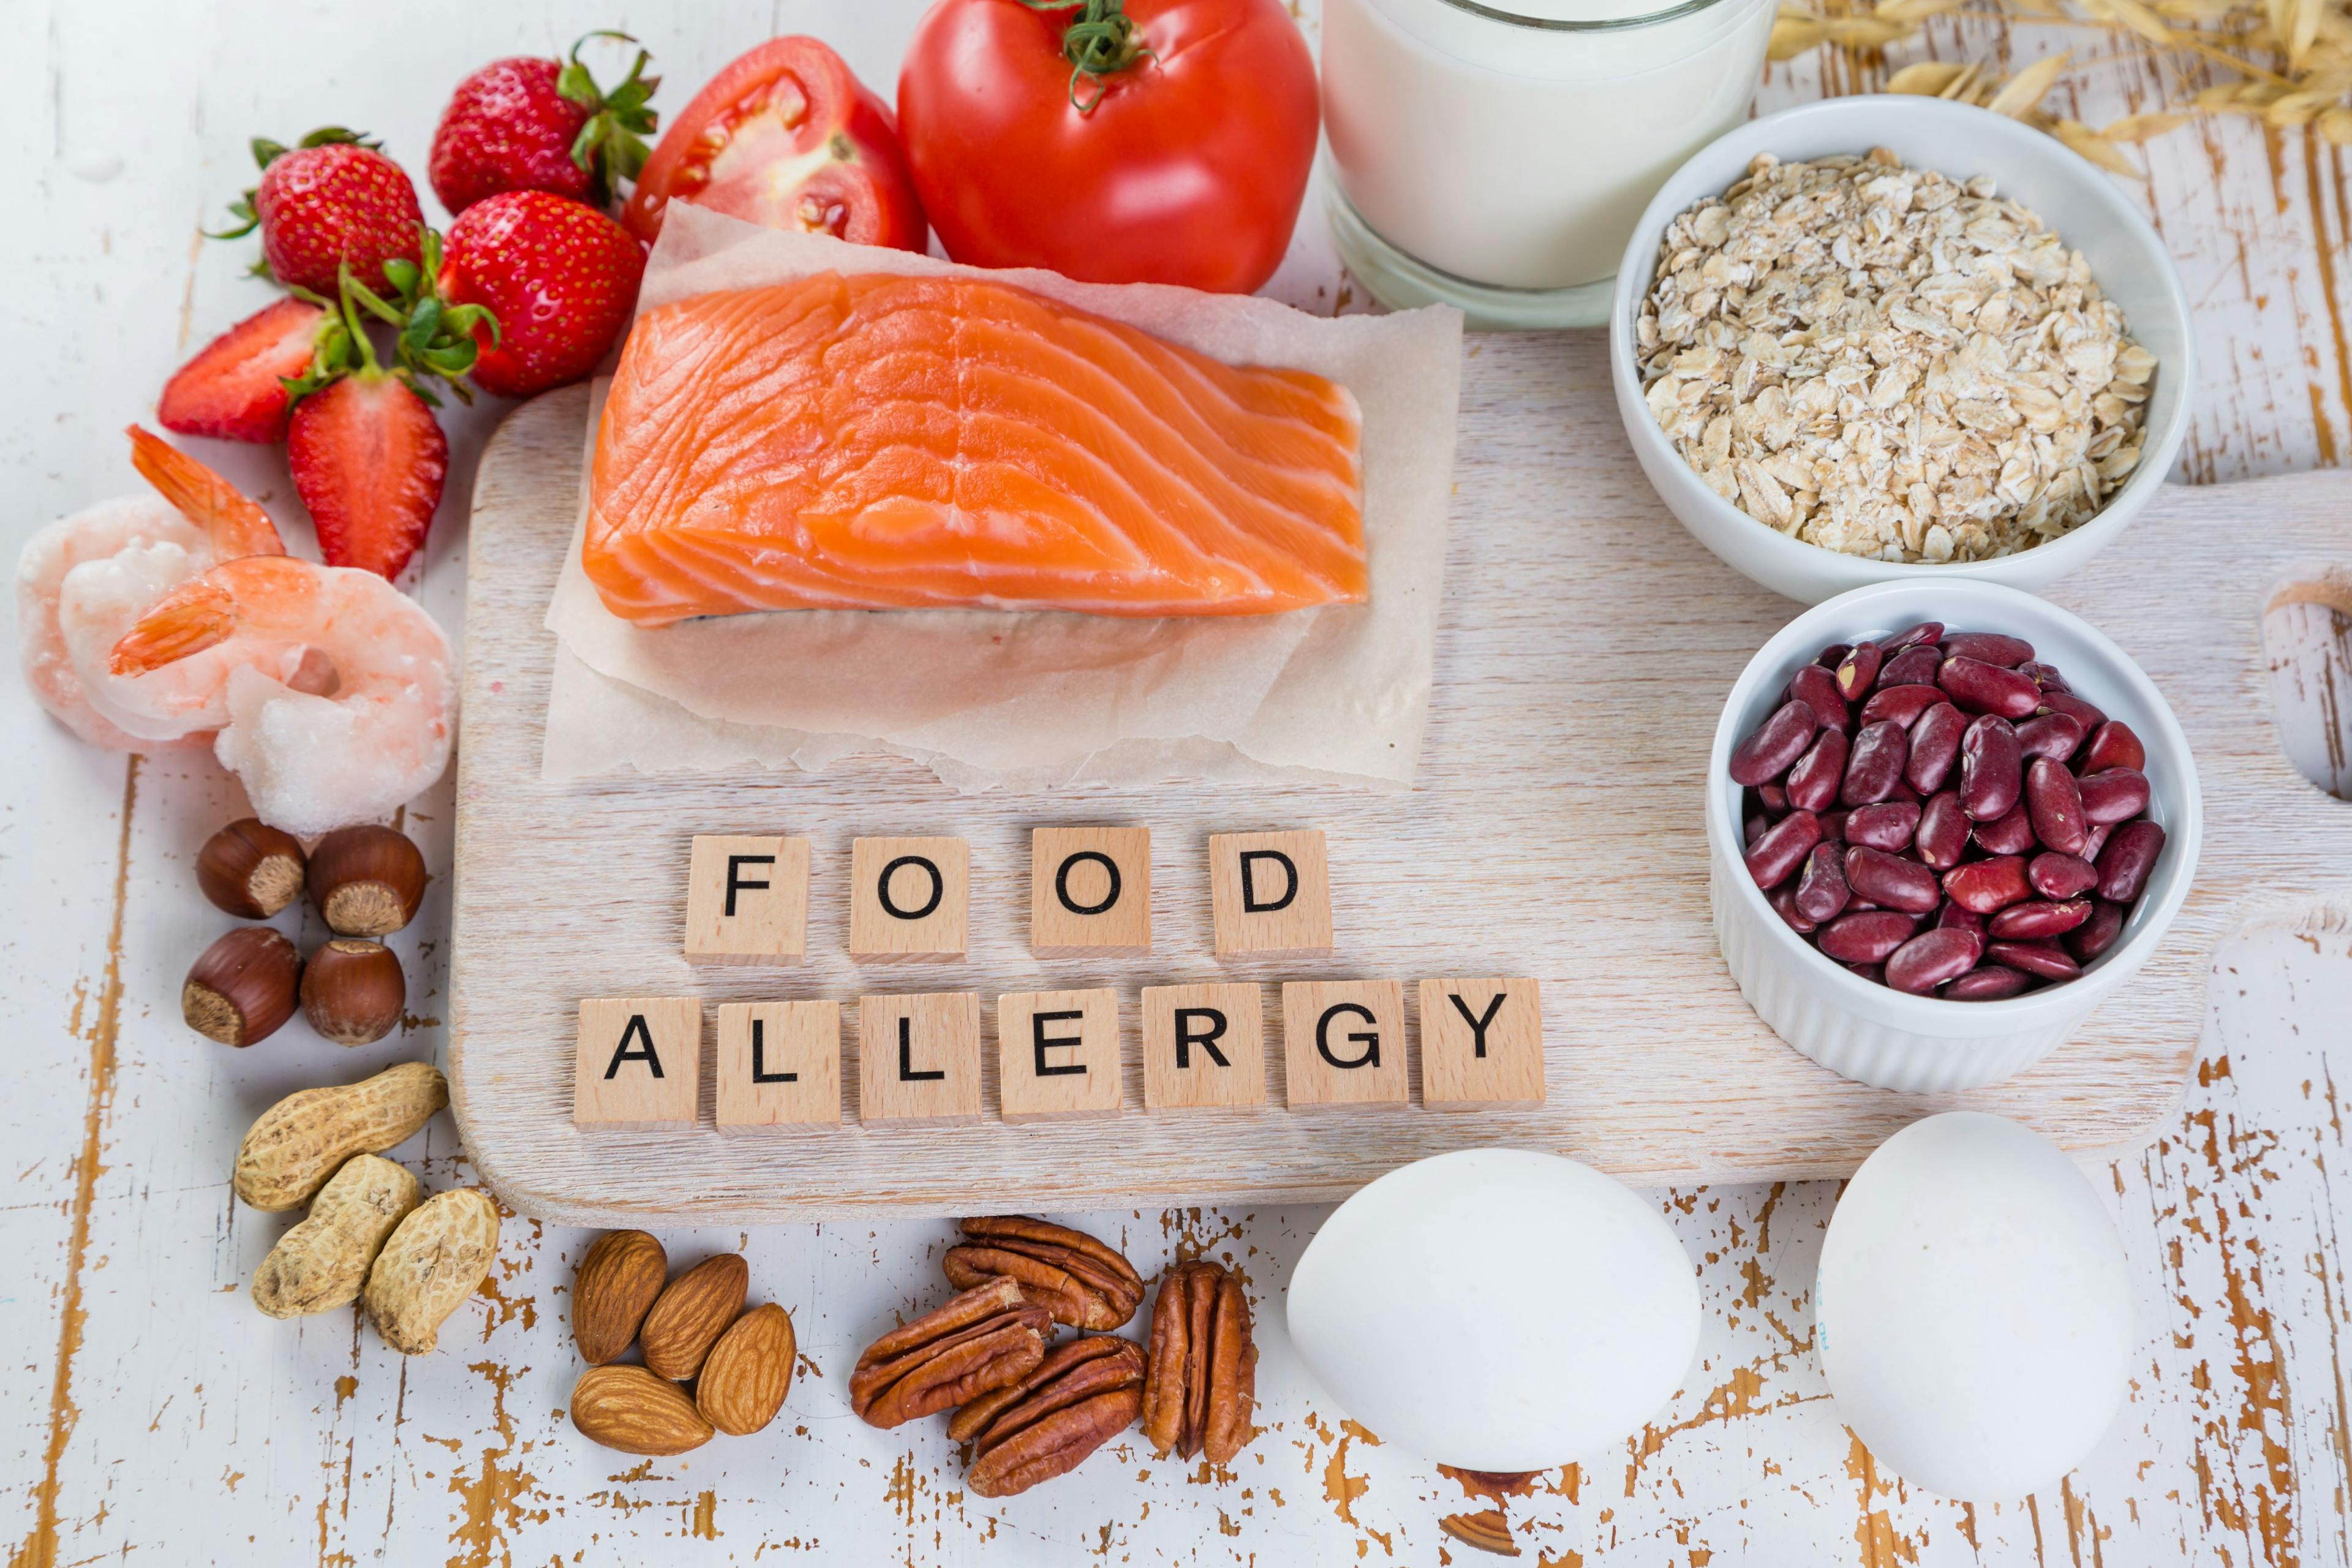 Increase in food allergies signals similar rise in cow’s milk allergy